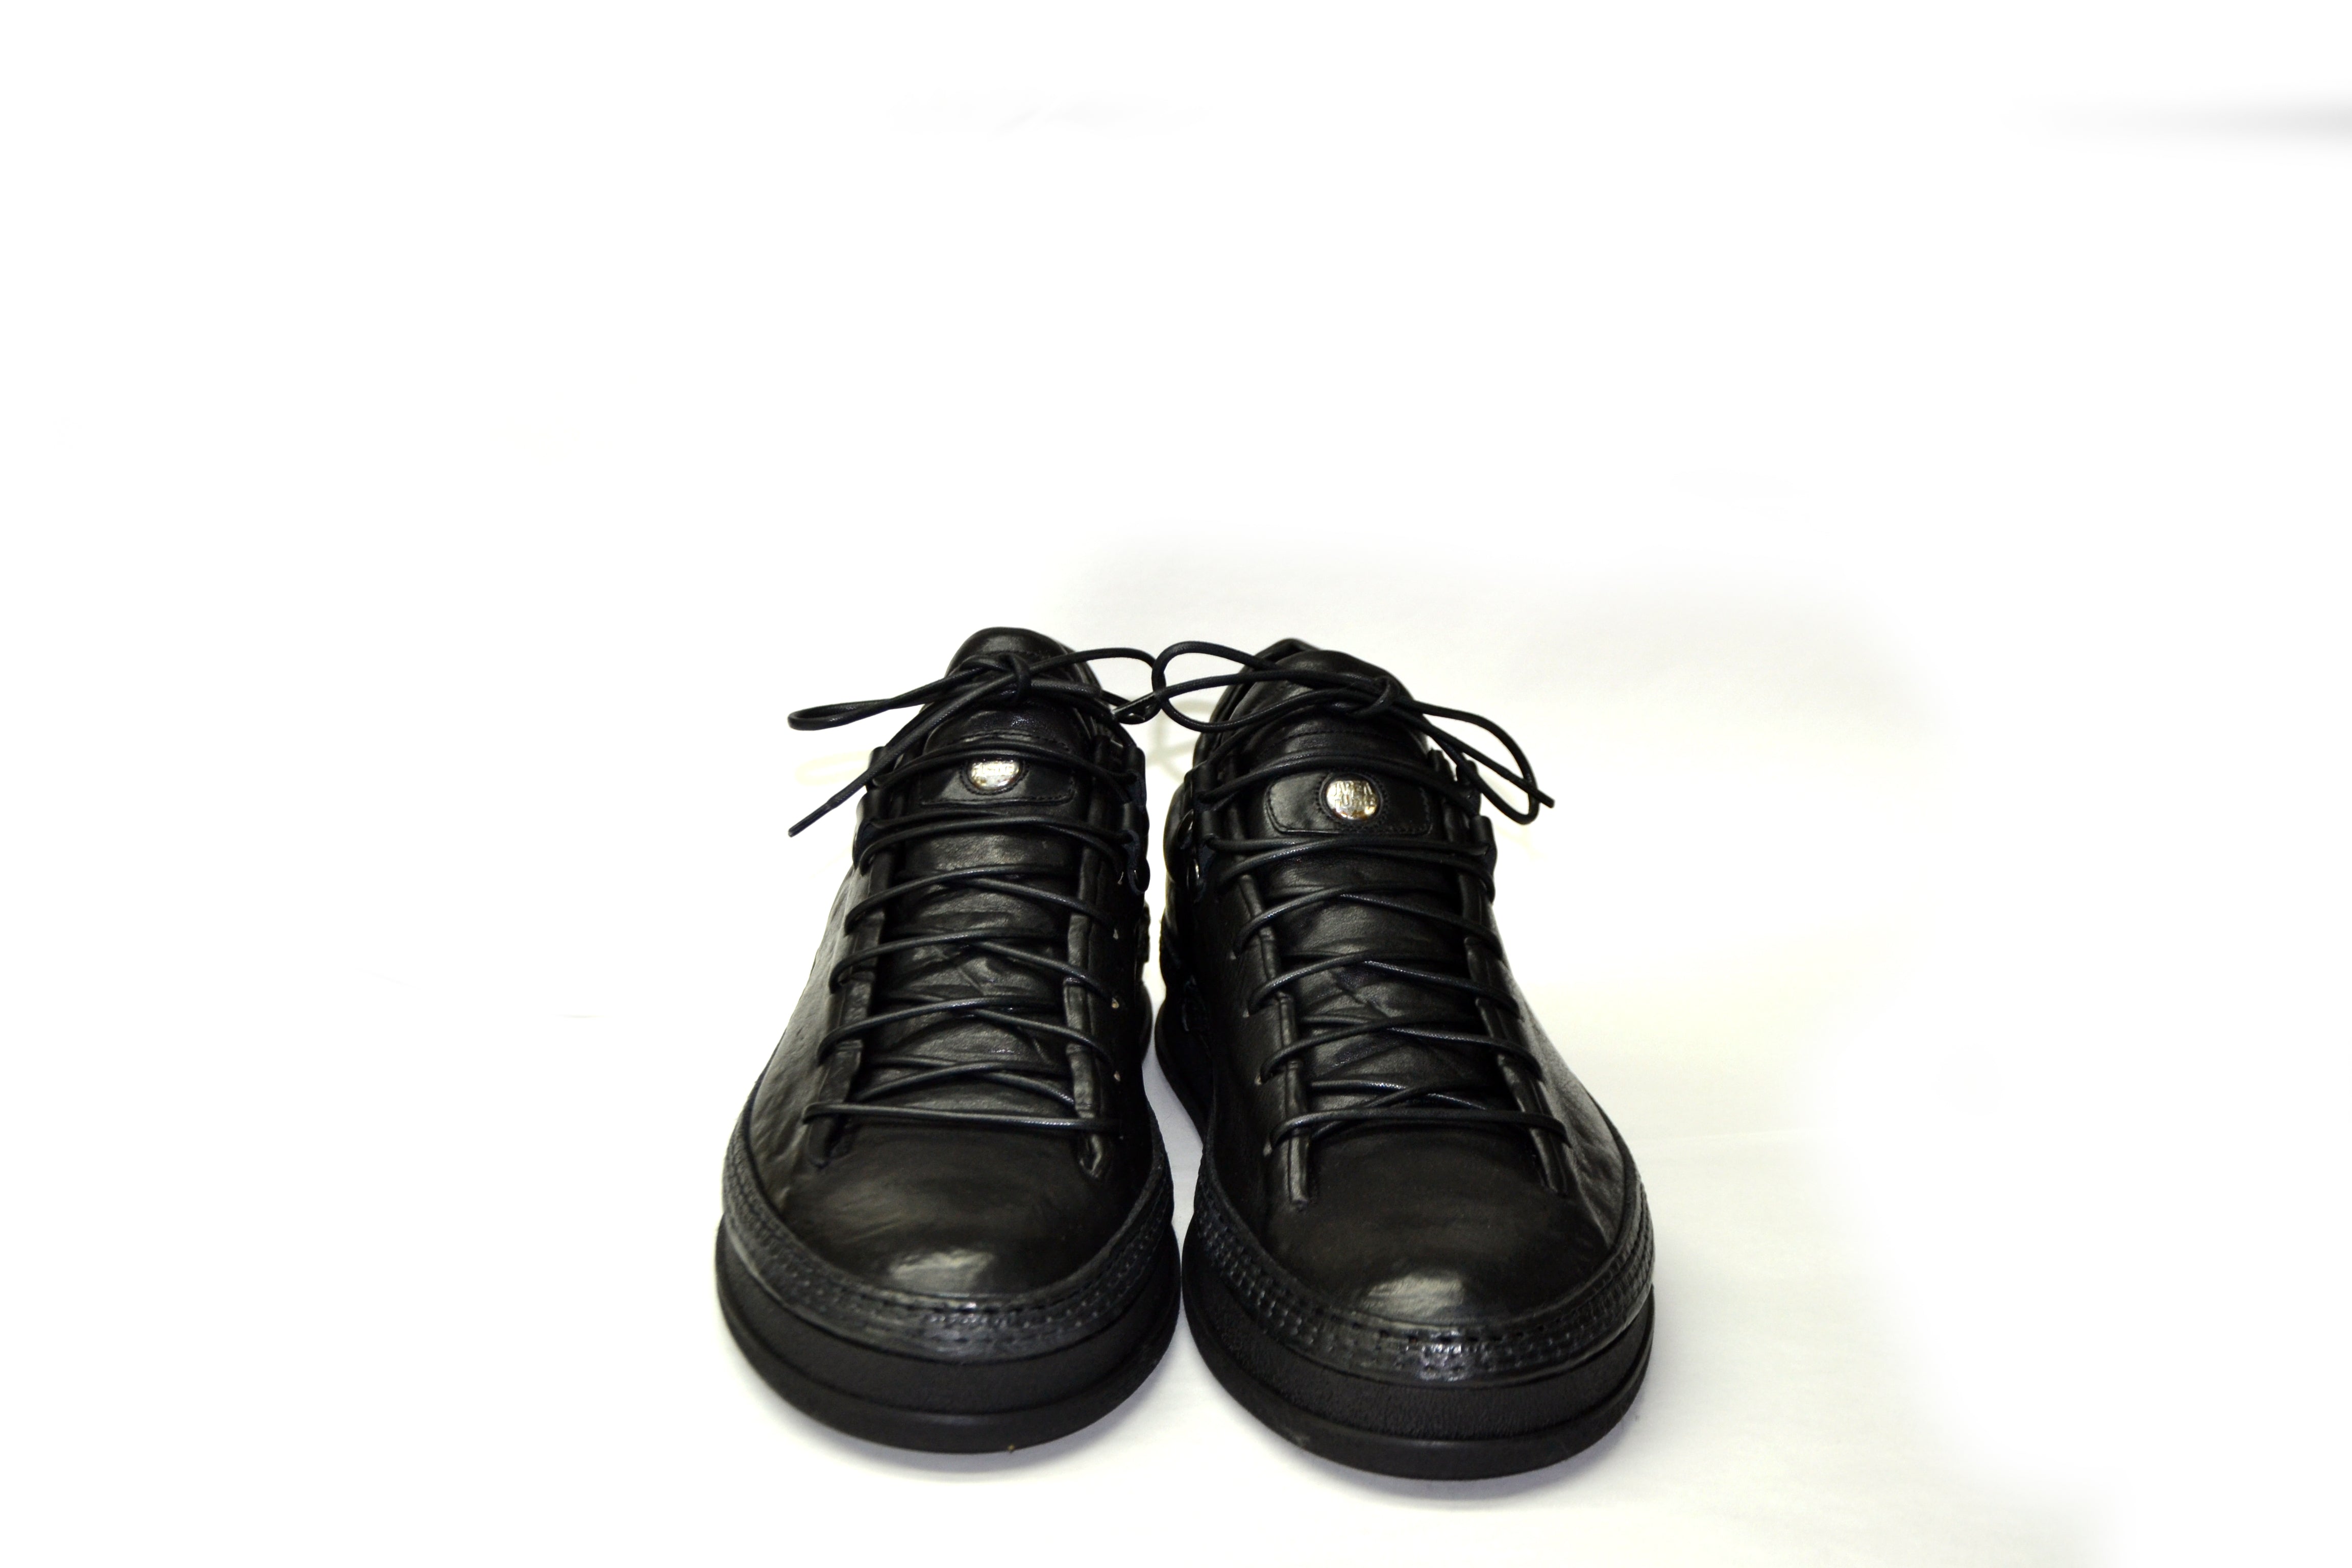 Pep black leather sneaker